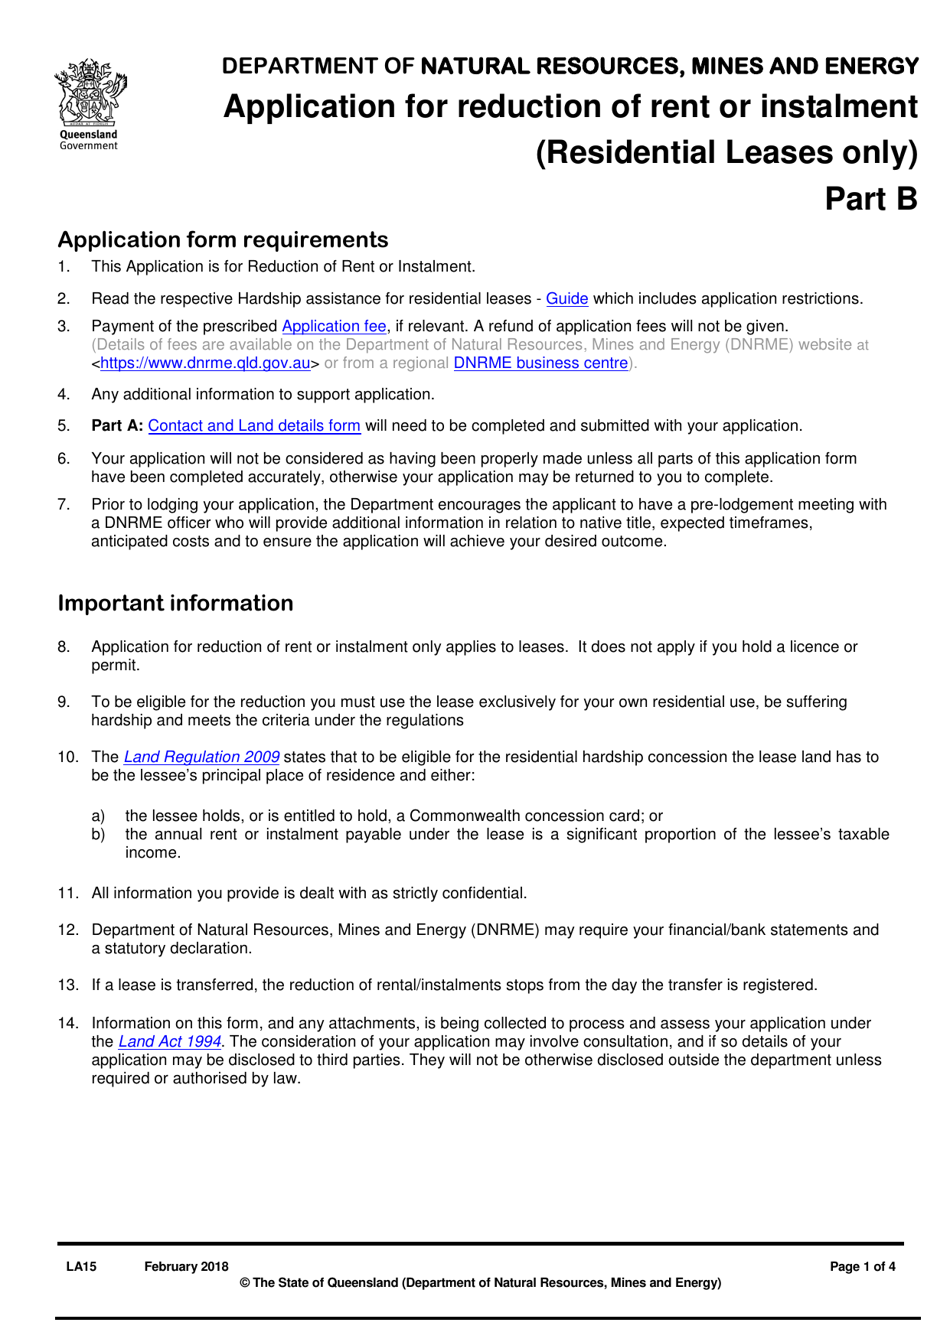 Form LA15 Part B Application for Reduction of Rent or Instalment - Queensland, Australia, Page 1